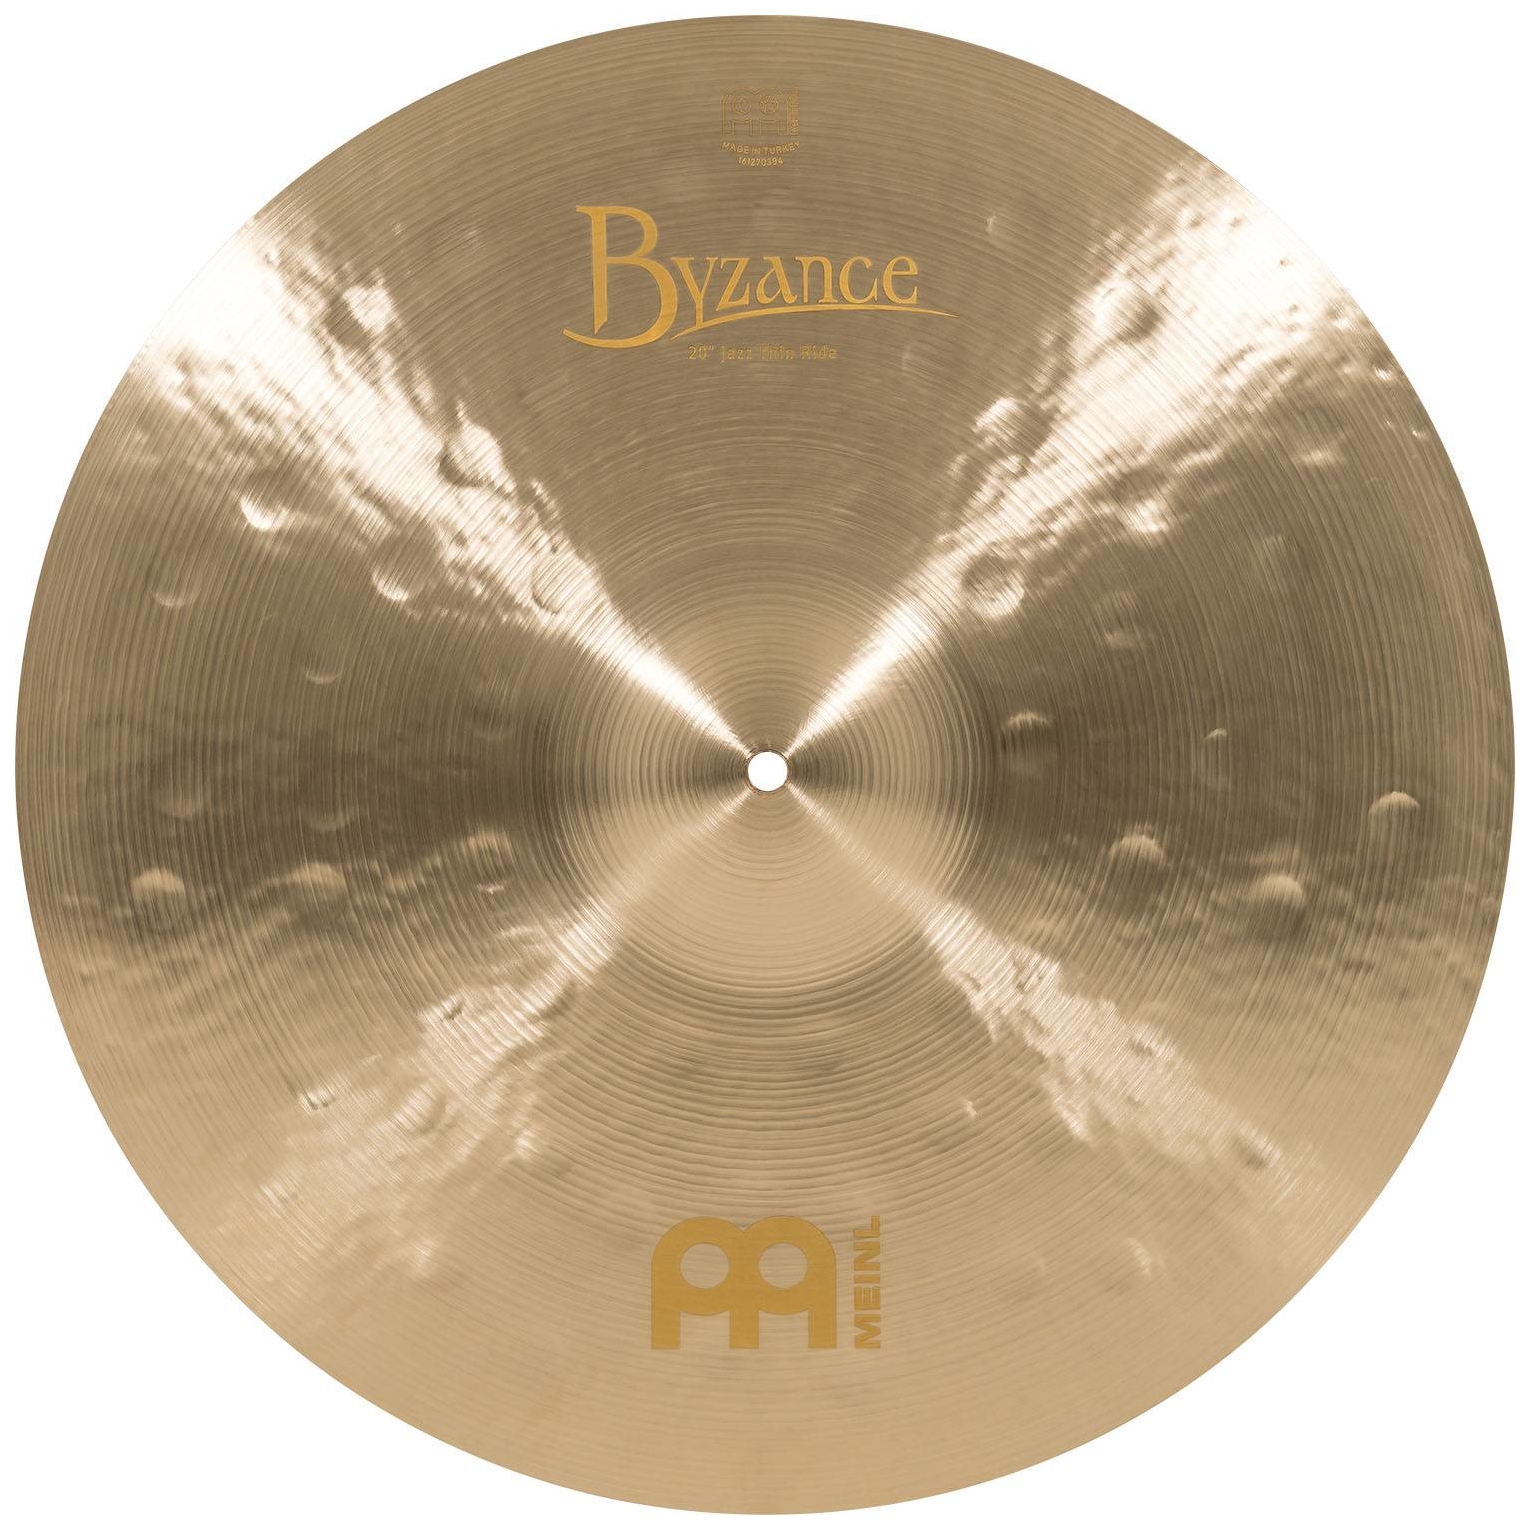 Meinl Cymbals B20JTR - 20" Byzance Jazz Thin Ride